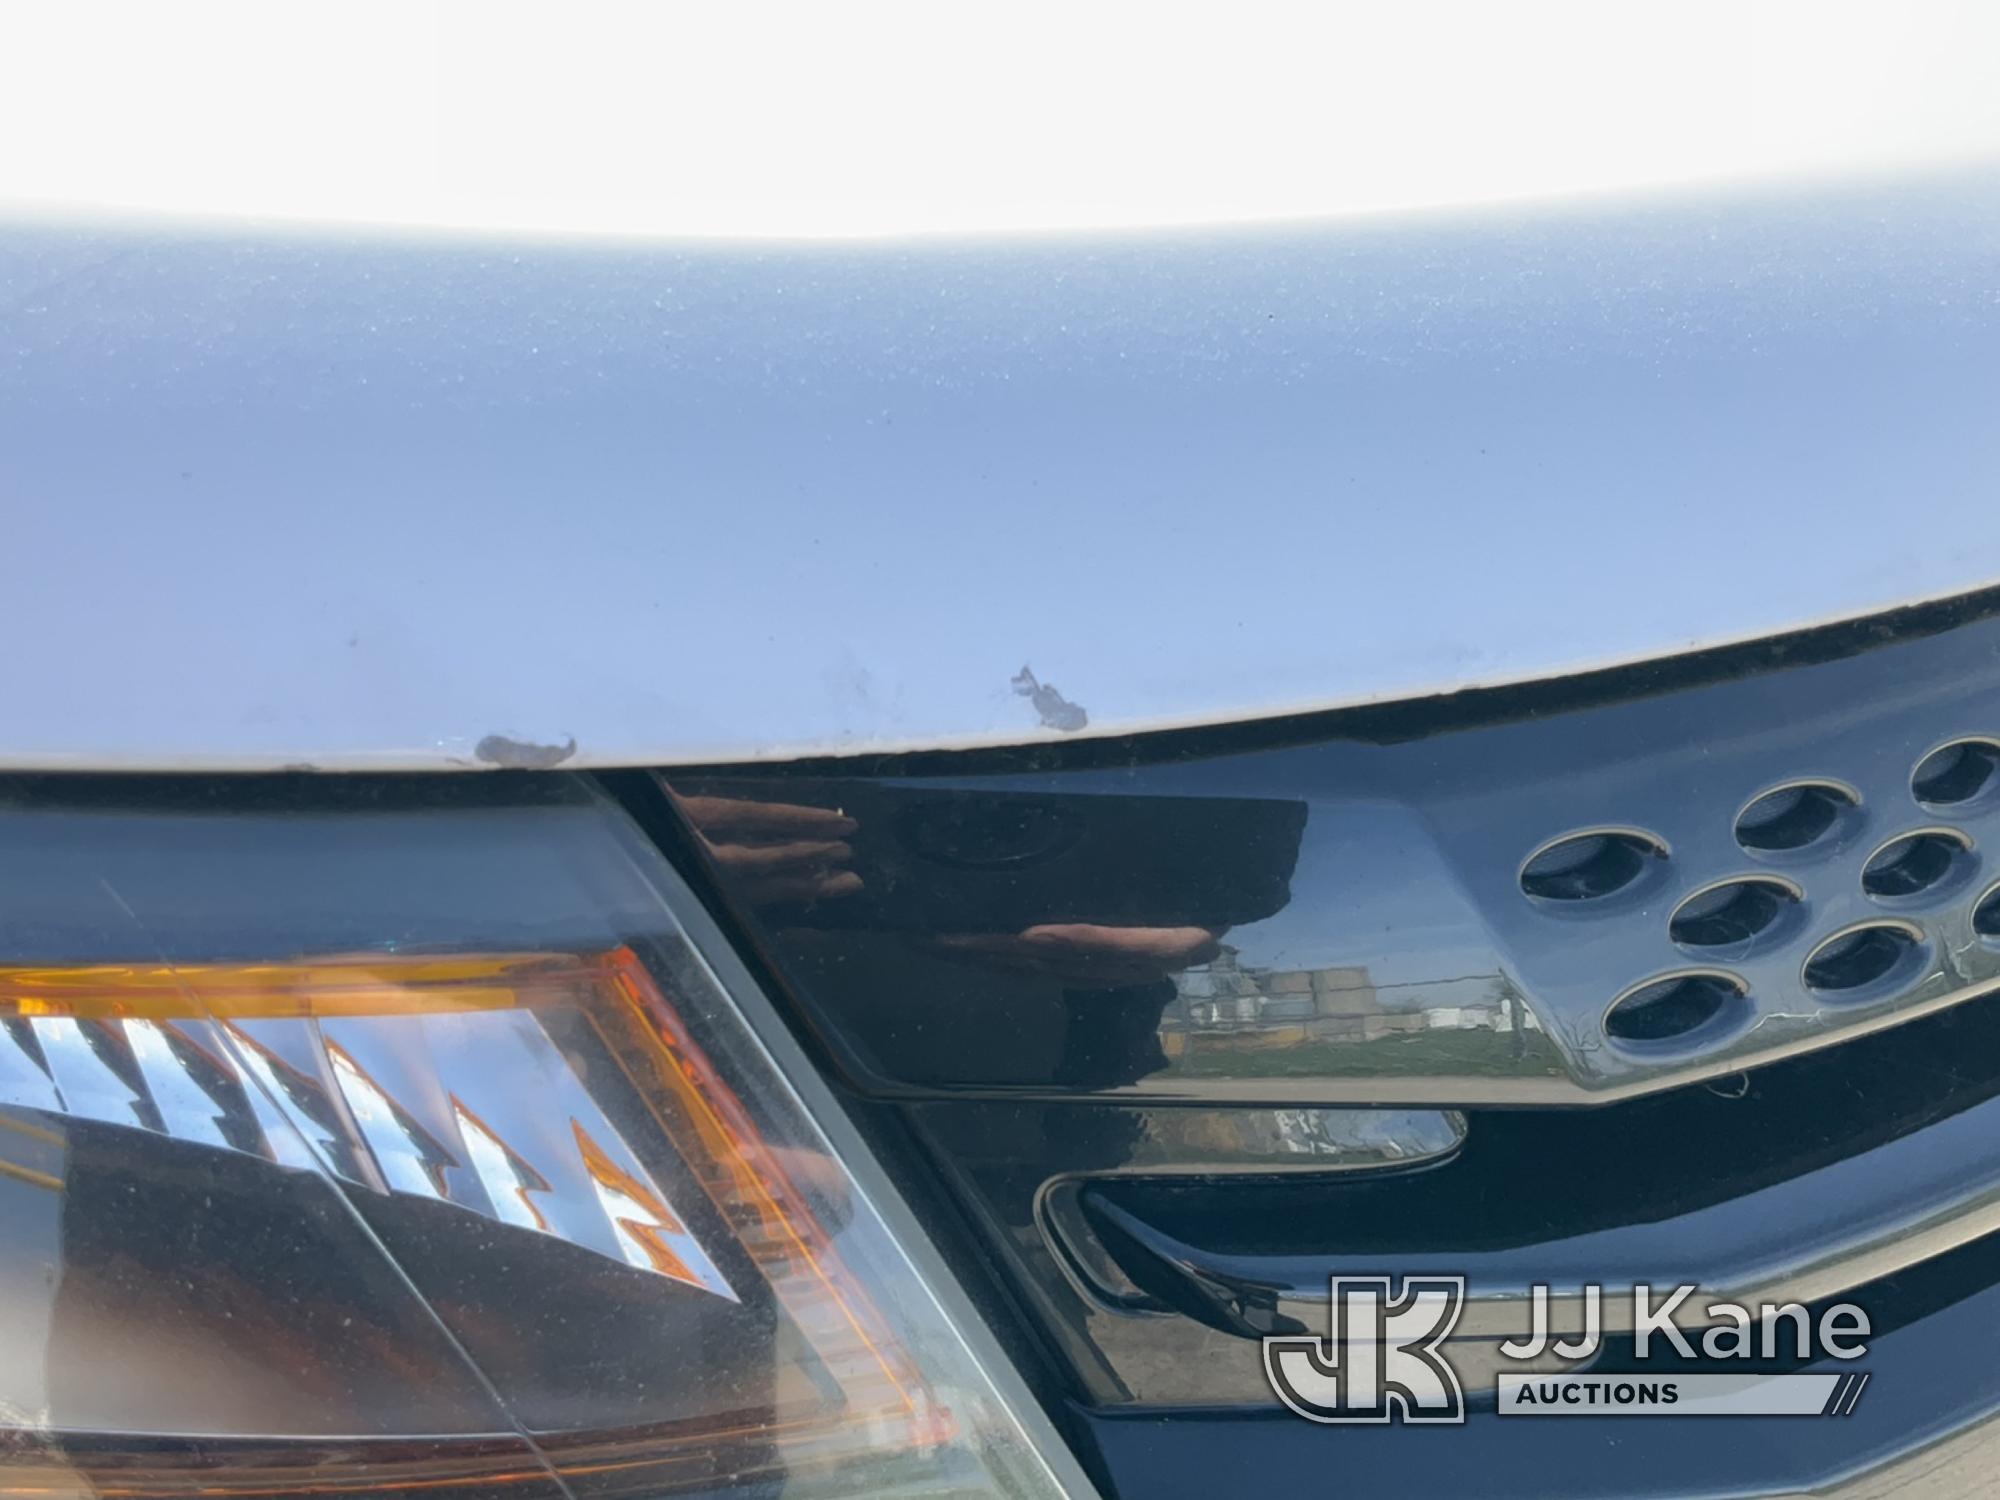 (South Beloit, IL) 2015 Ford Explorer AWD Police Interceptor 4-Door Sport Utility Vehicle Runs & Mov